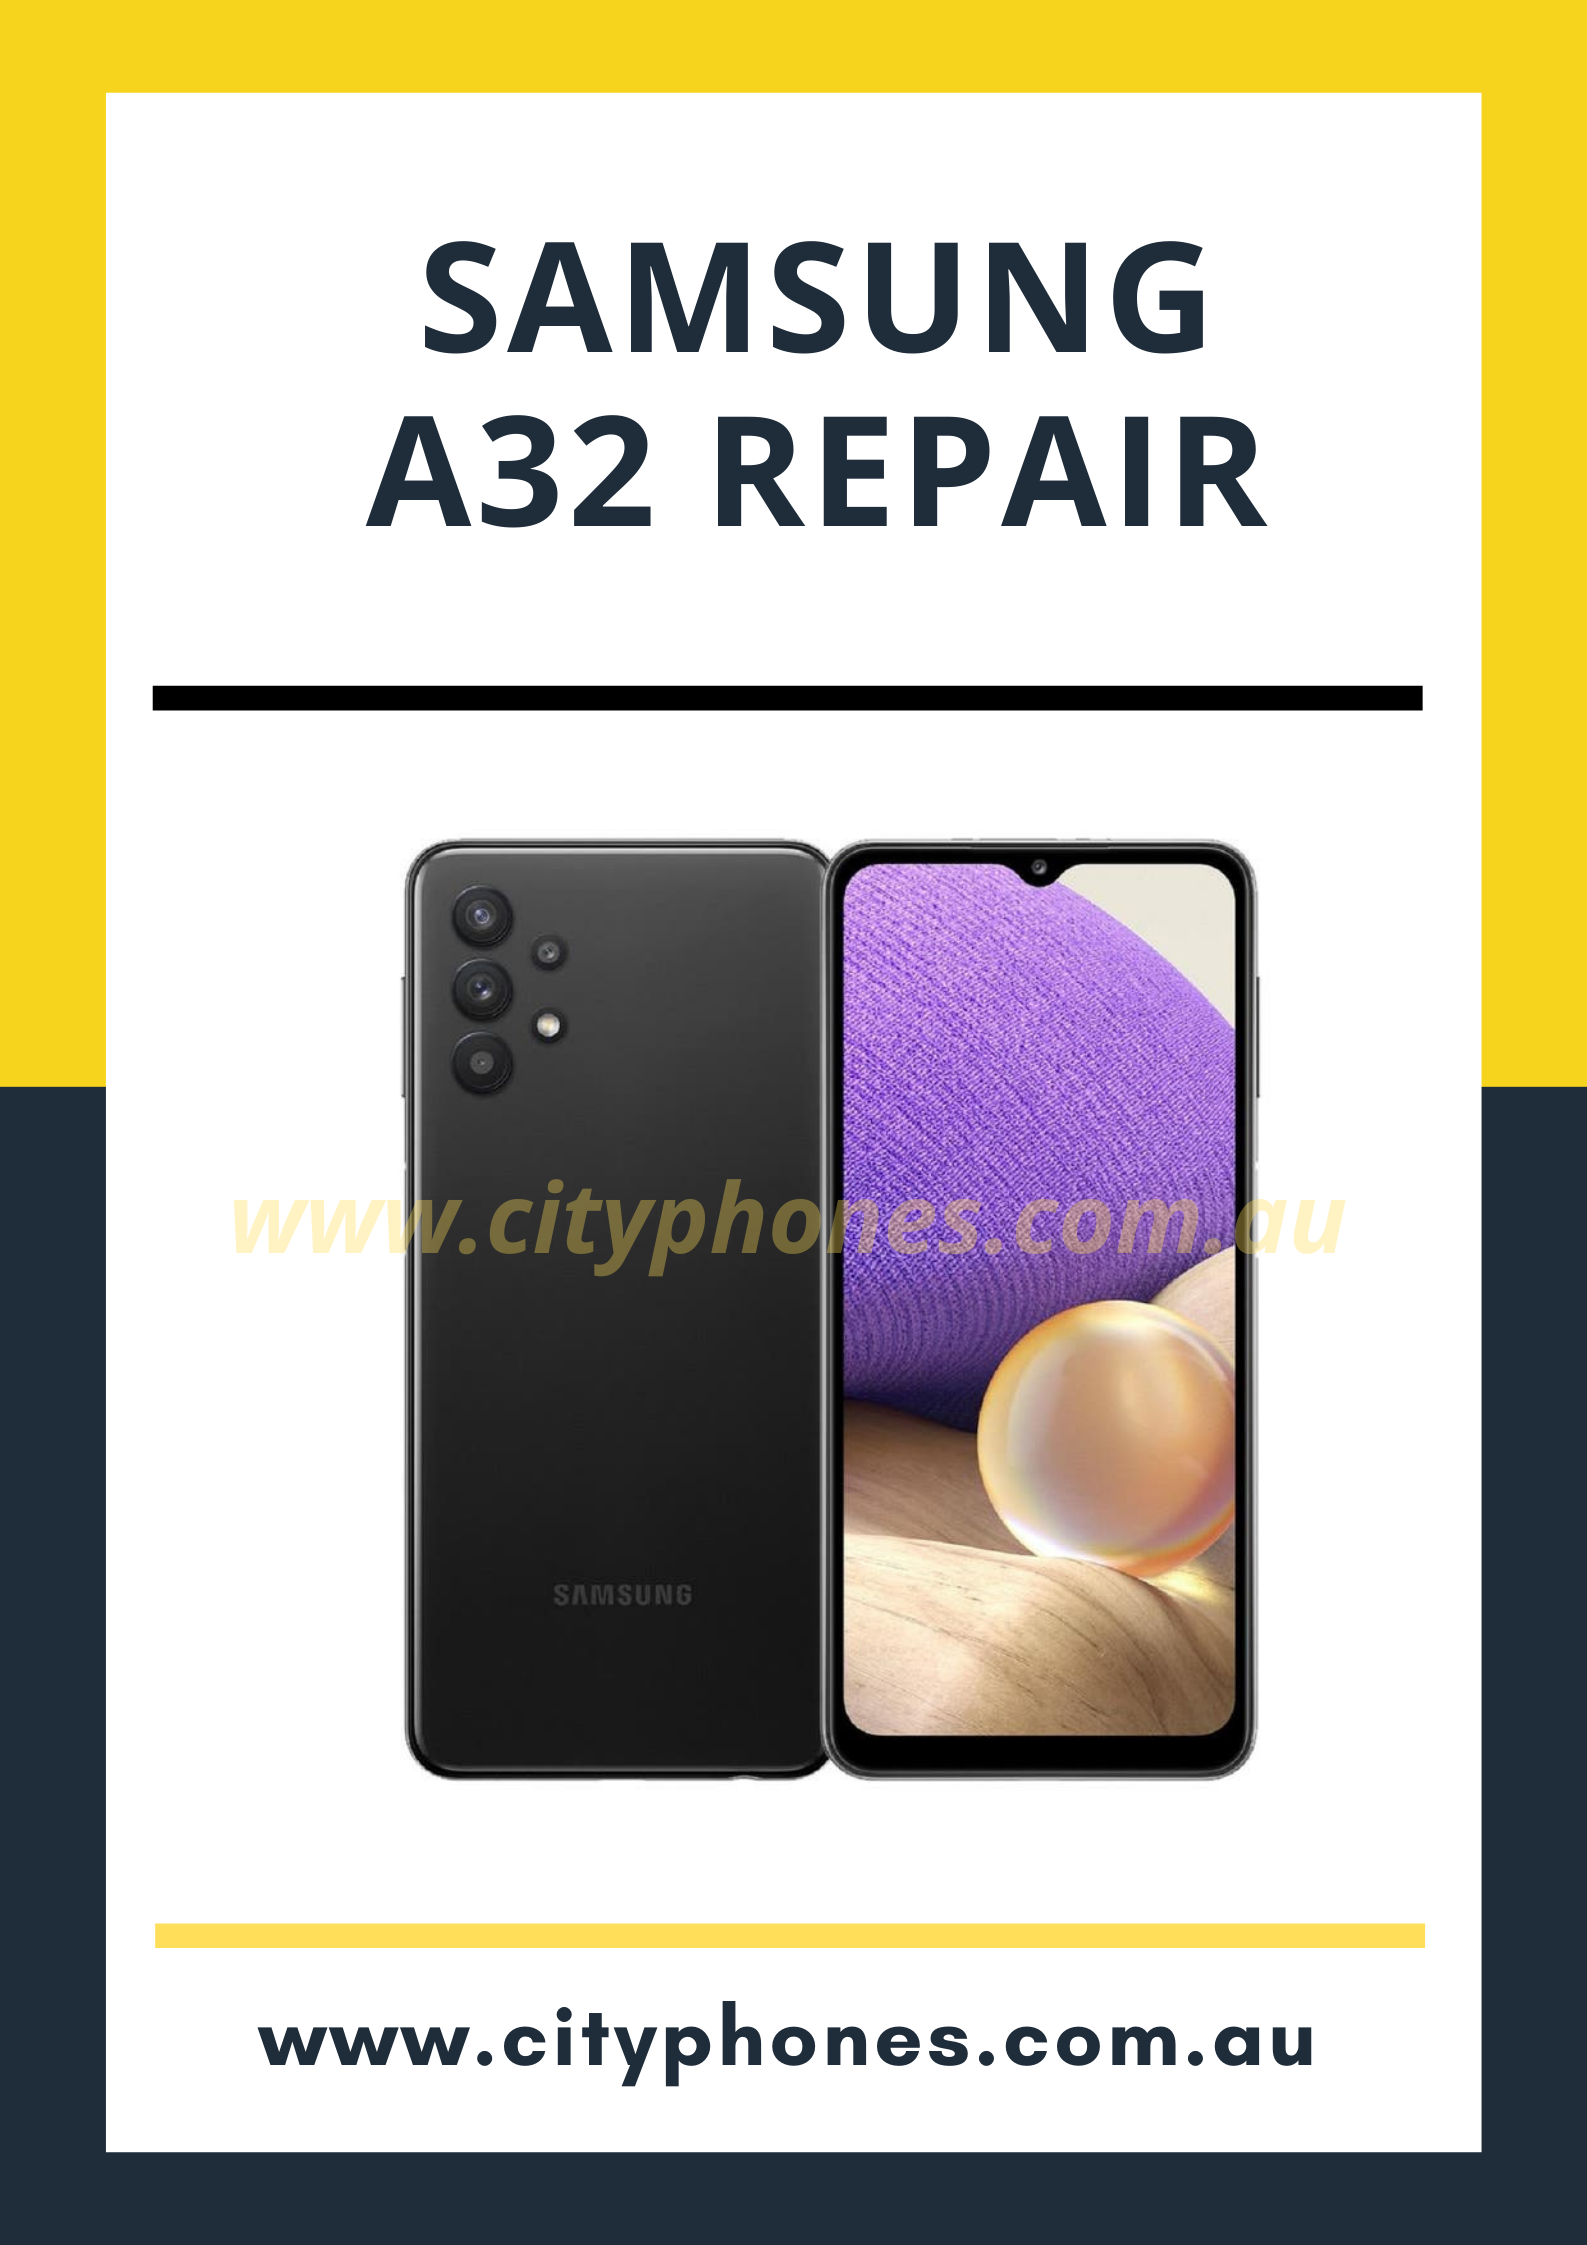 Samsung a32 repair cost